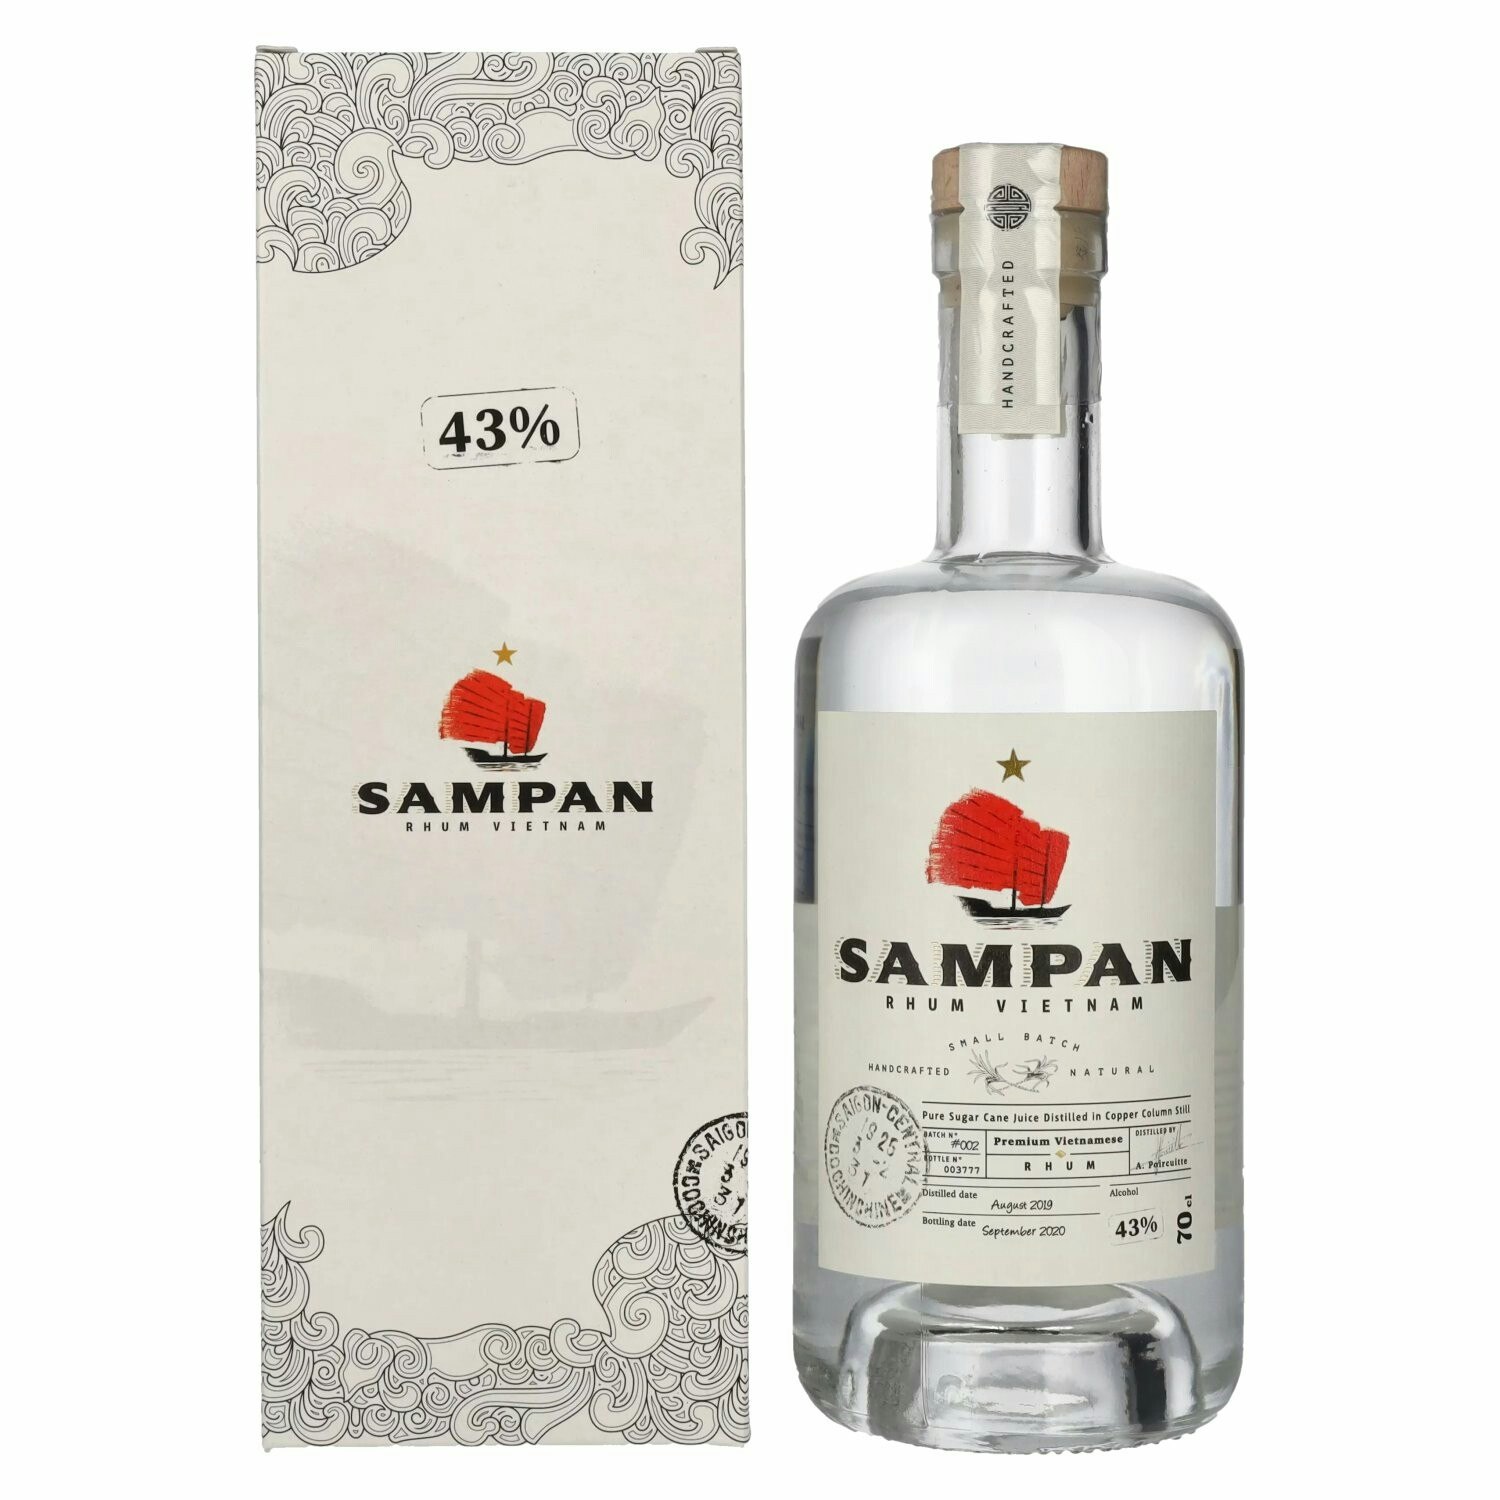 Sampan Rhum Vietnam 43% Vol. 0,7l in Giftbox